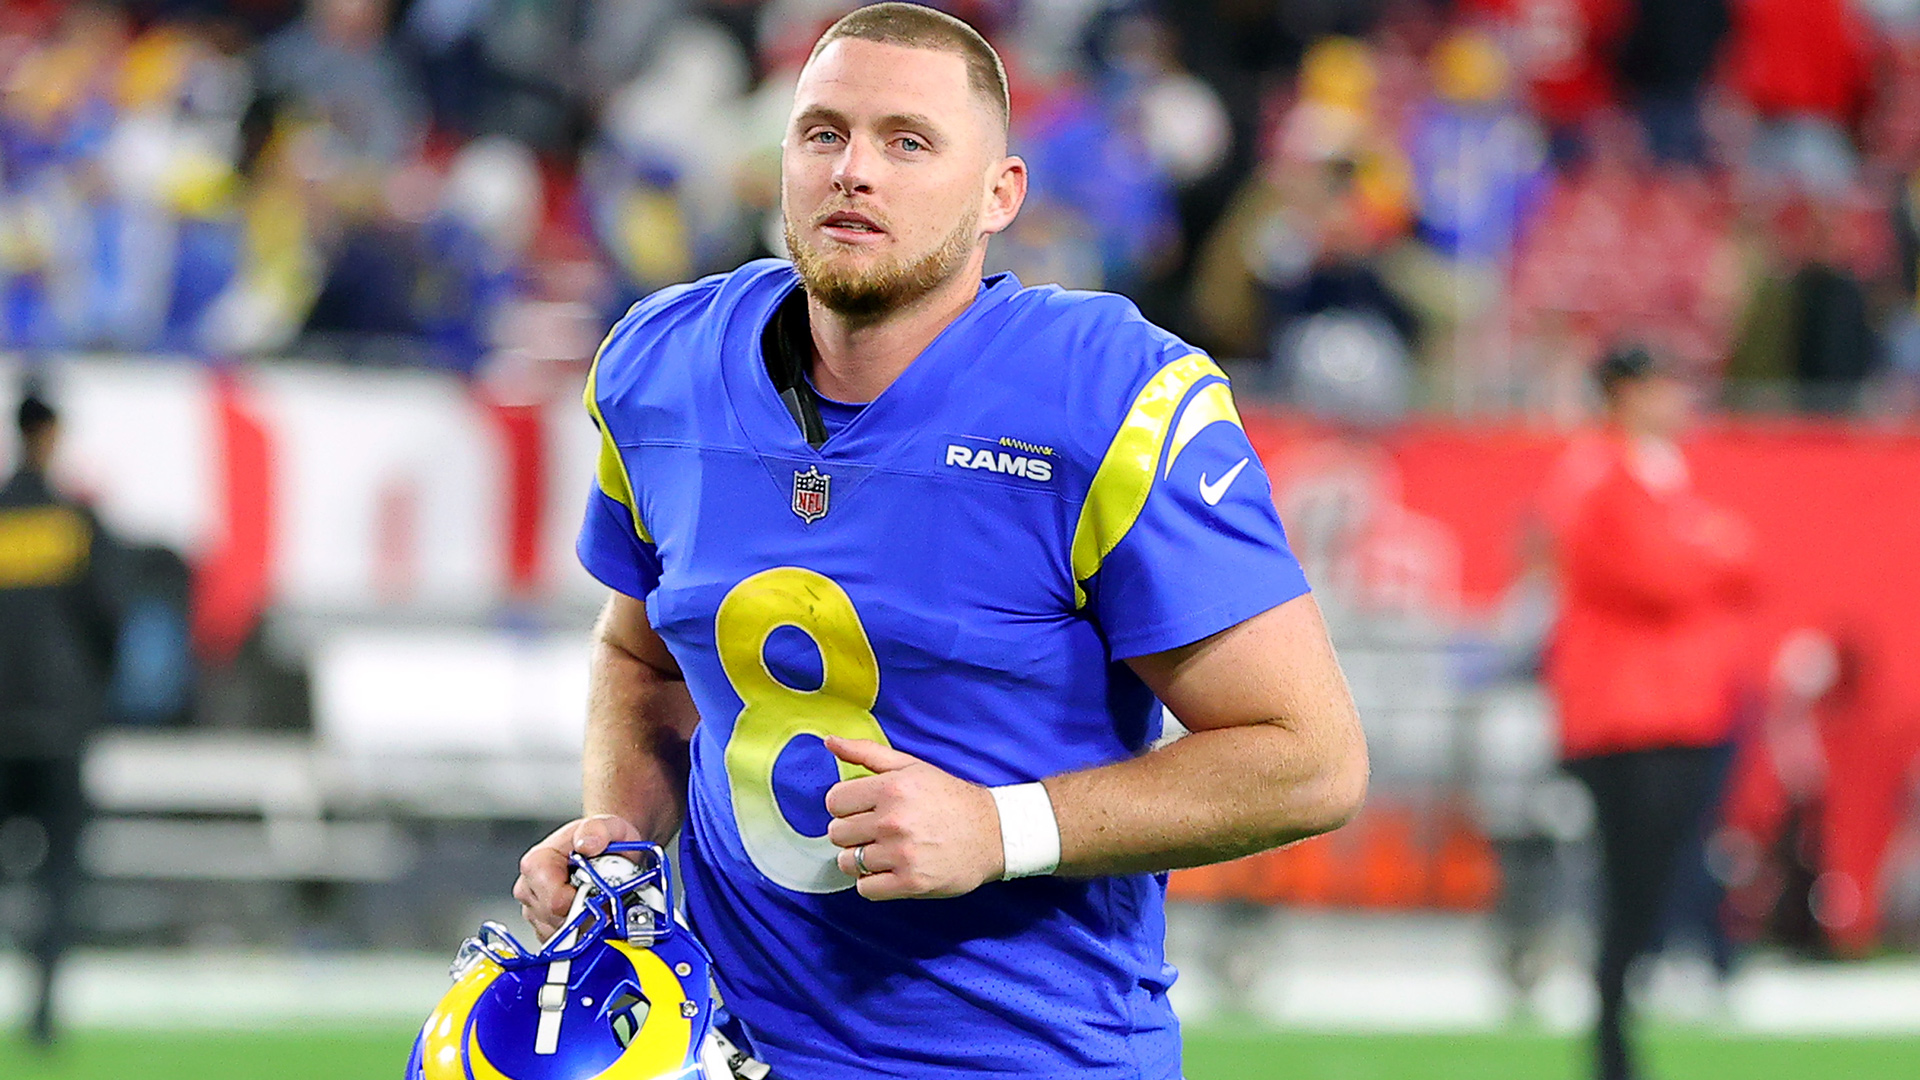 Rams Kicker Hilariously Mocks NFL's Uniform Rules After $5K Fine